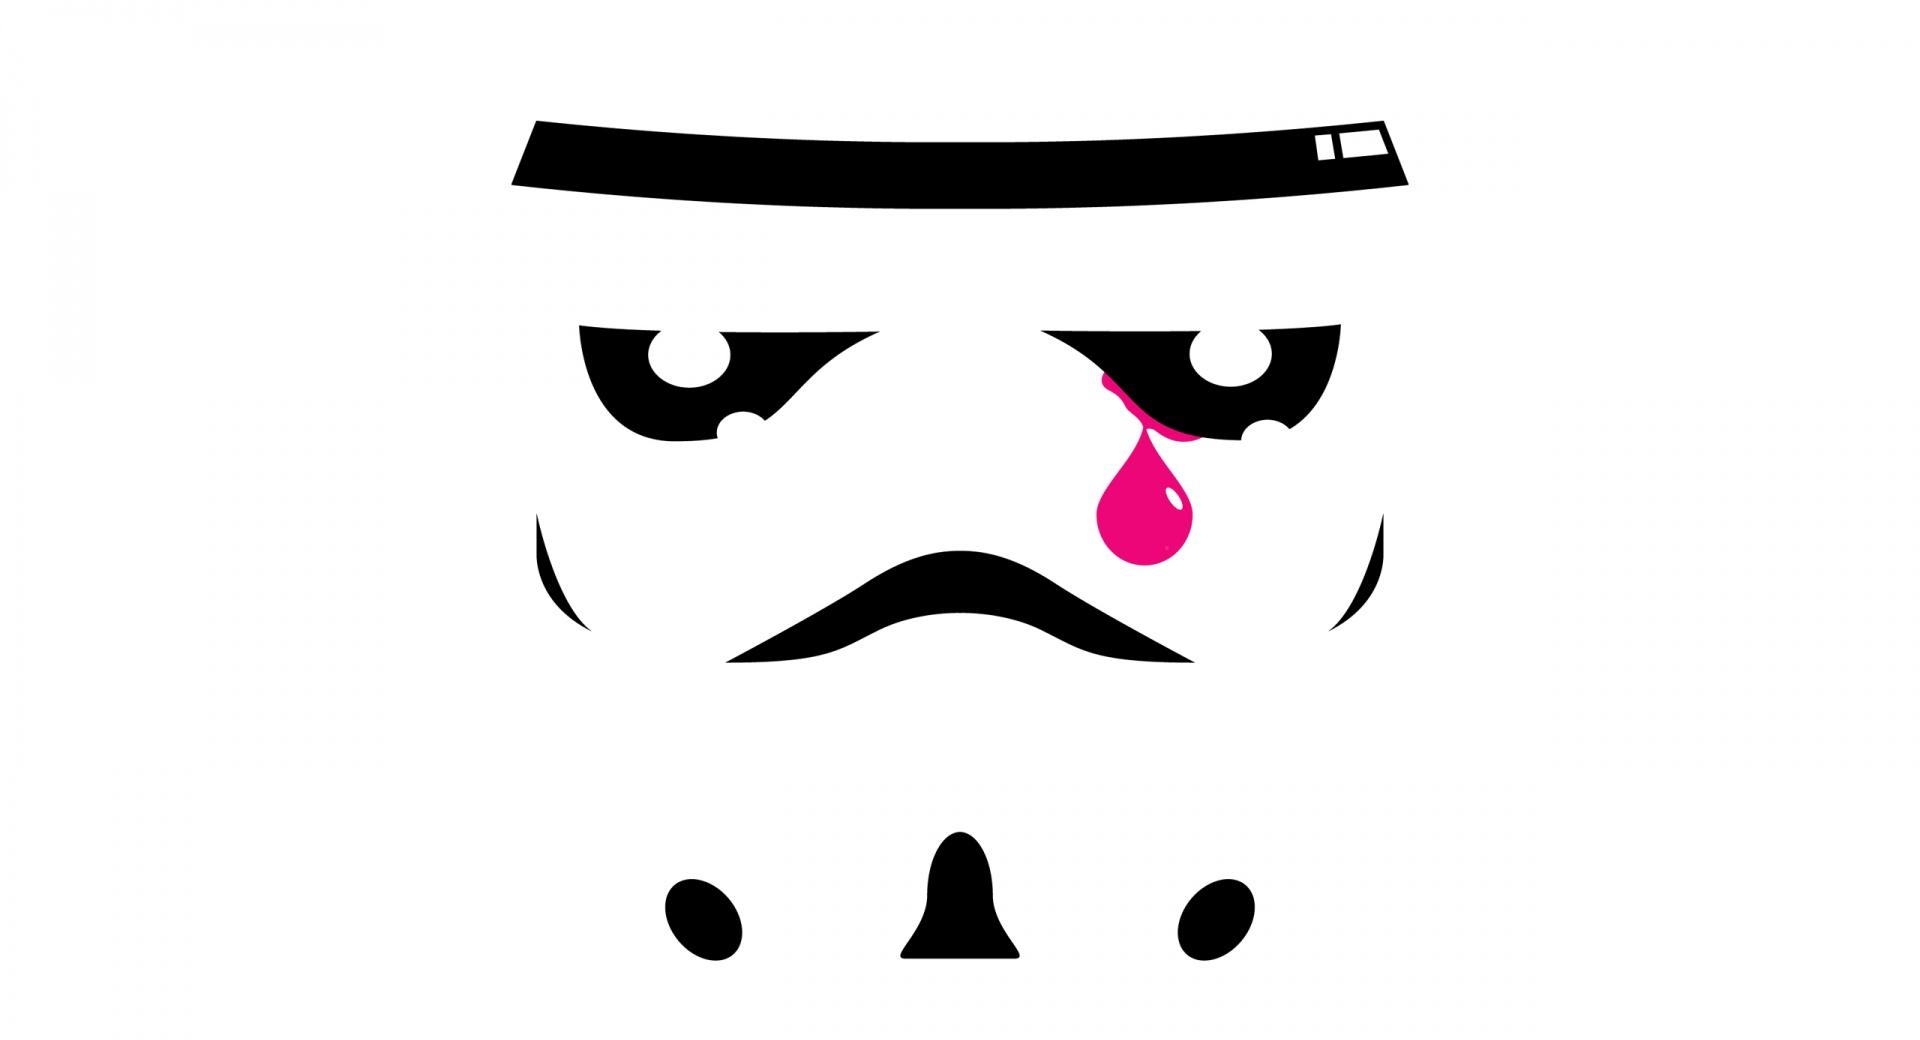 Star Wars Stormtrooper Tear at 2048 x 2048 iPad size wallpapers HD quality